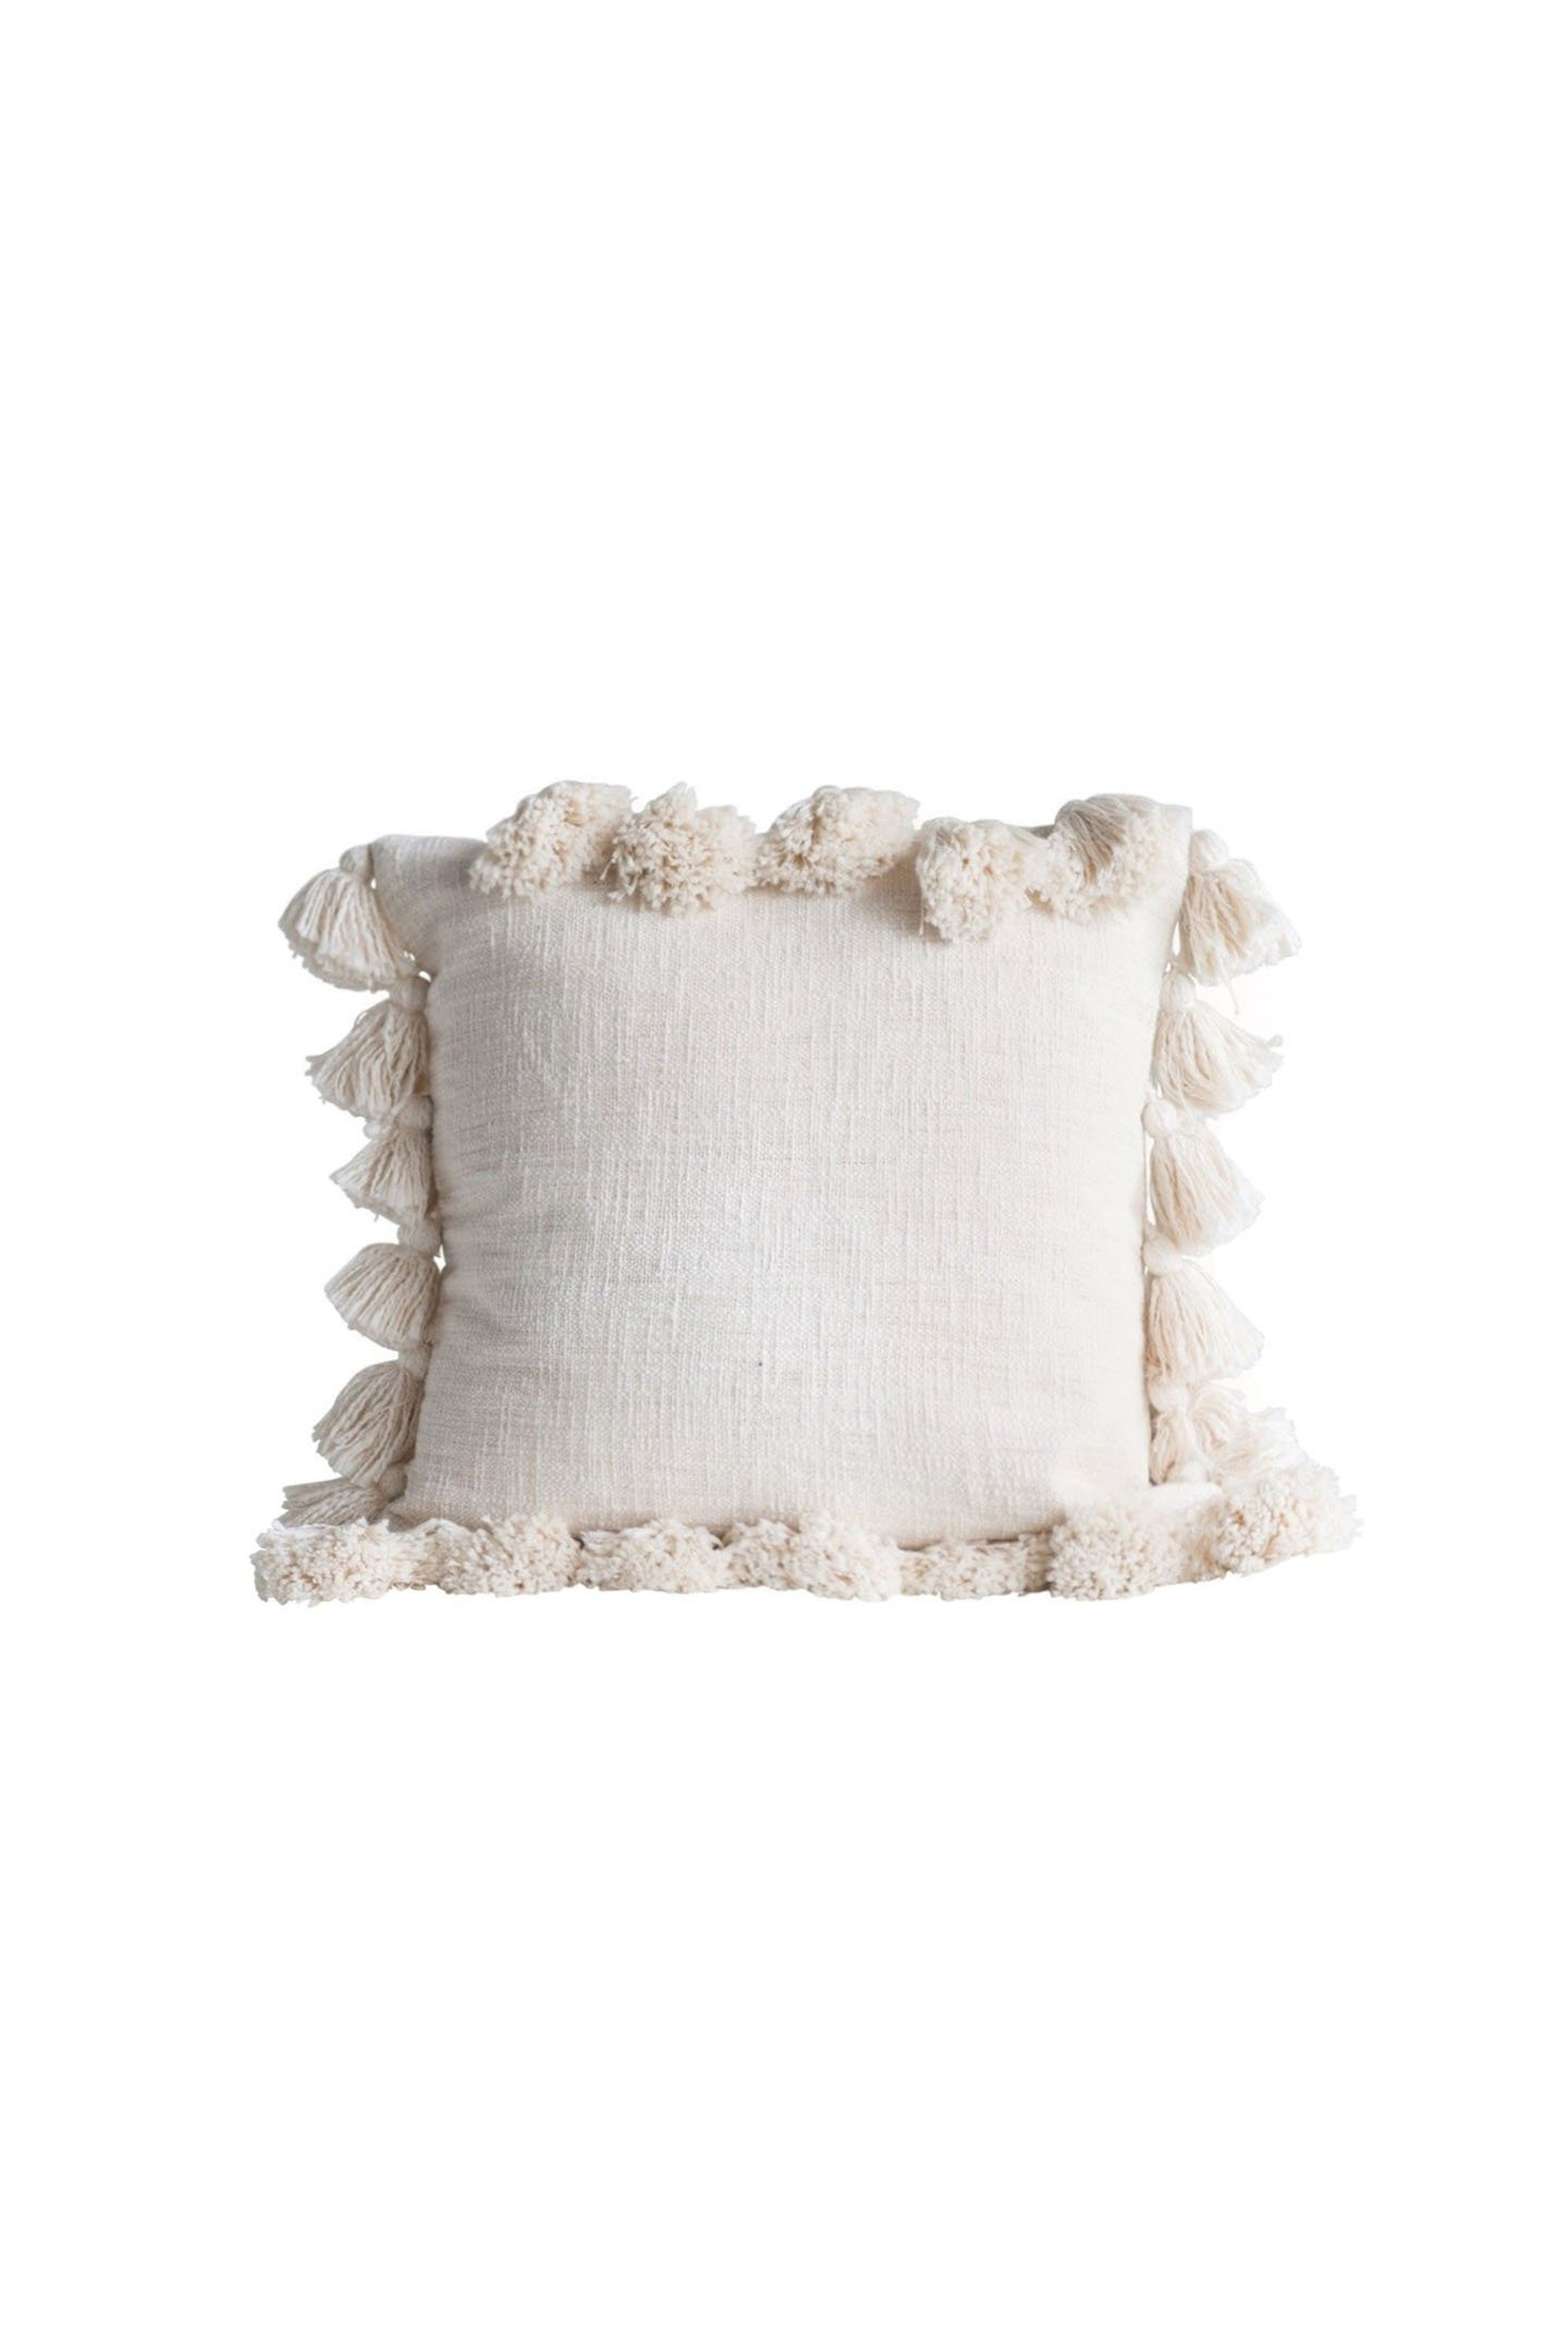 Neva Pillow 18" x 18" Cream palette - Cove Goods